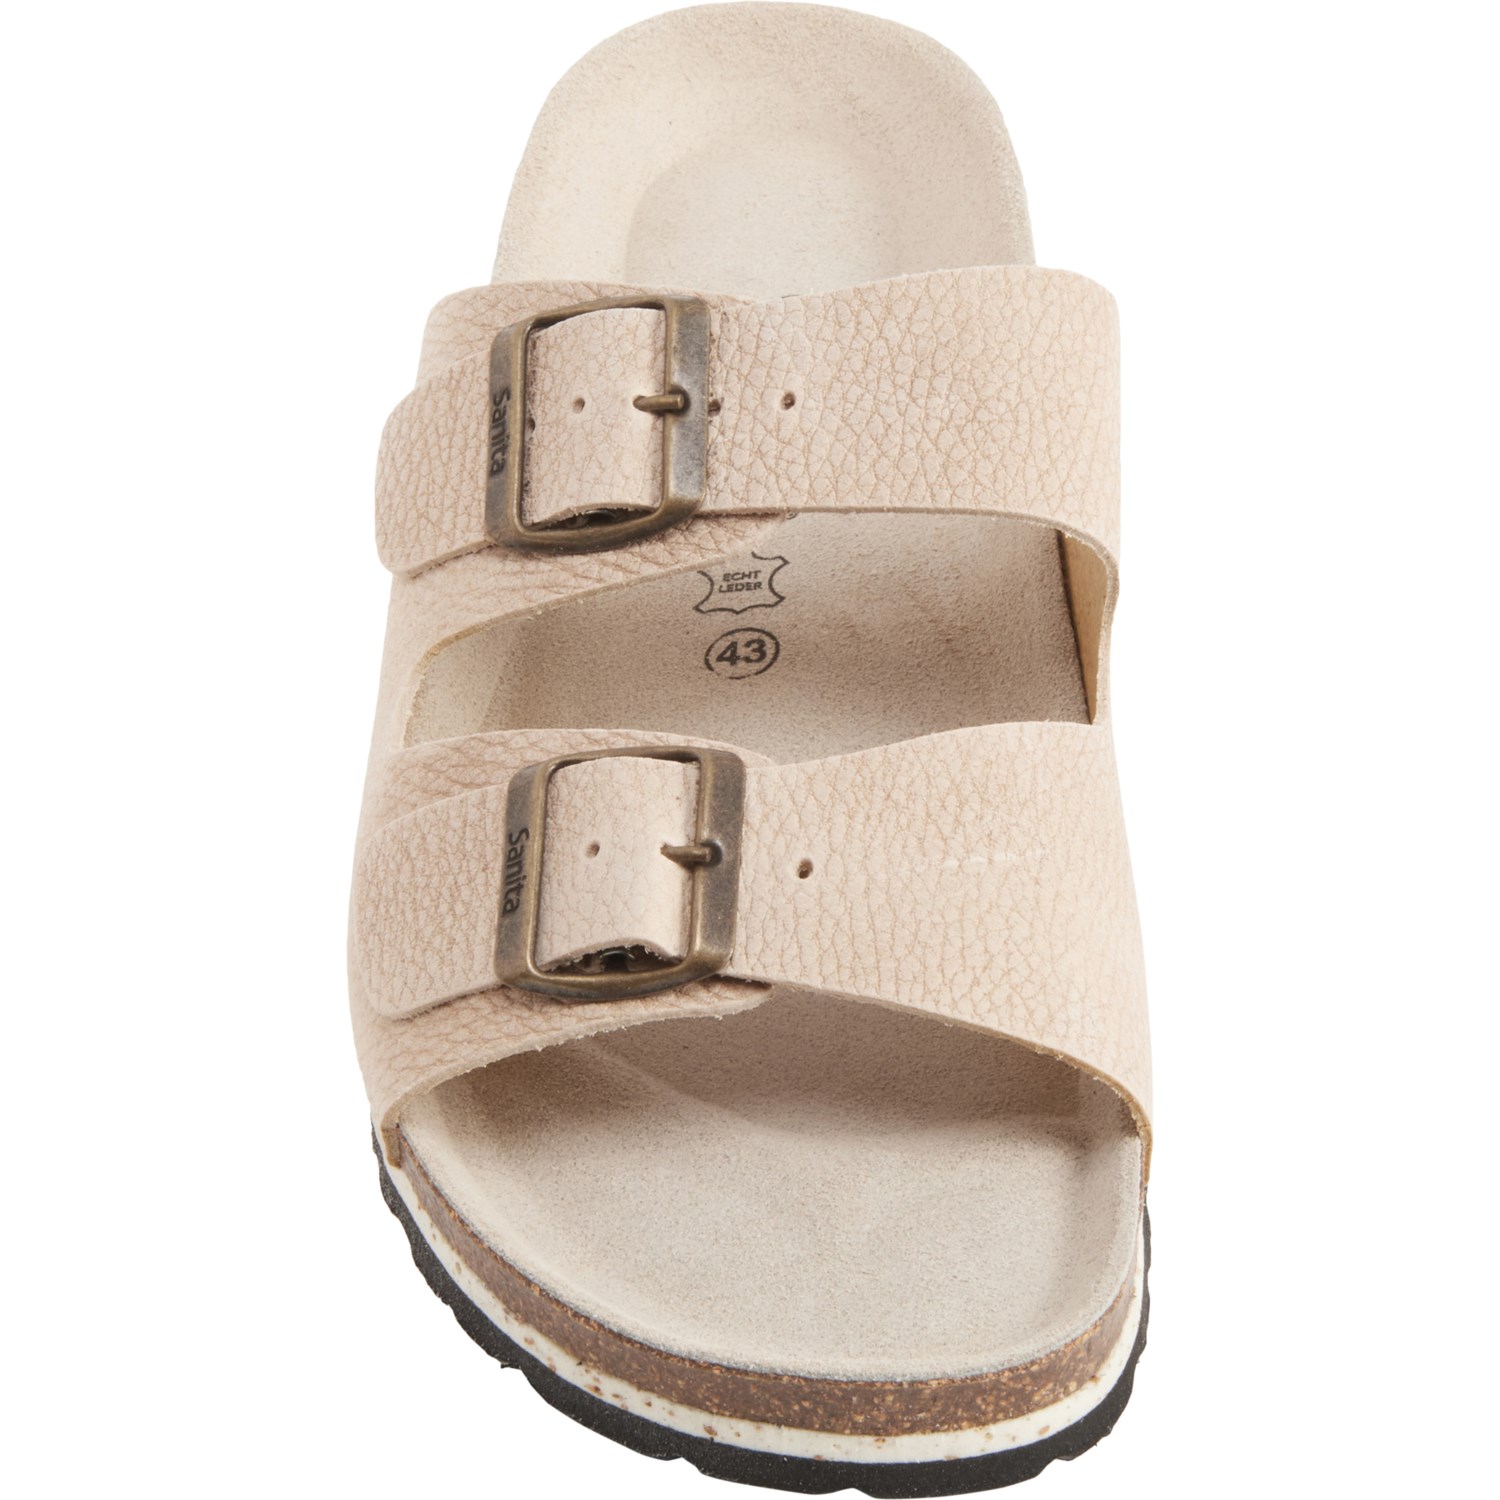 Sanita Made in Spain Ibiza Sandals (For Men) - Save 36%